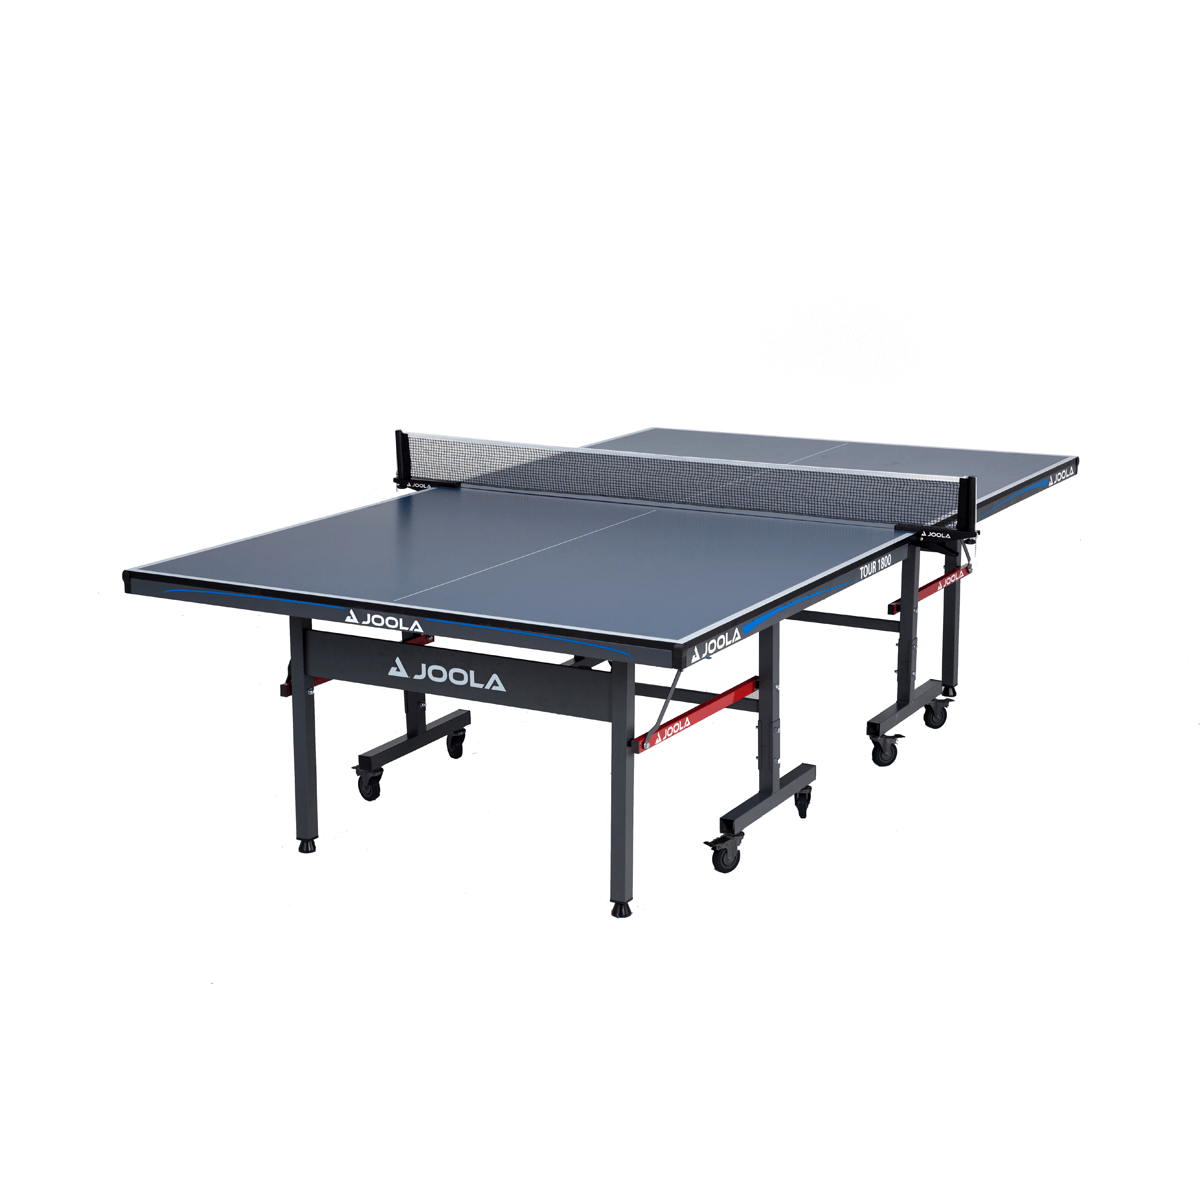 JOOLA 1800 Tour Table Tennis Table (18mm)